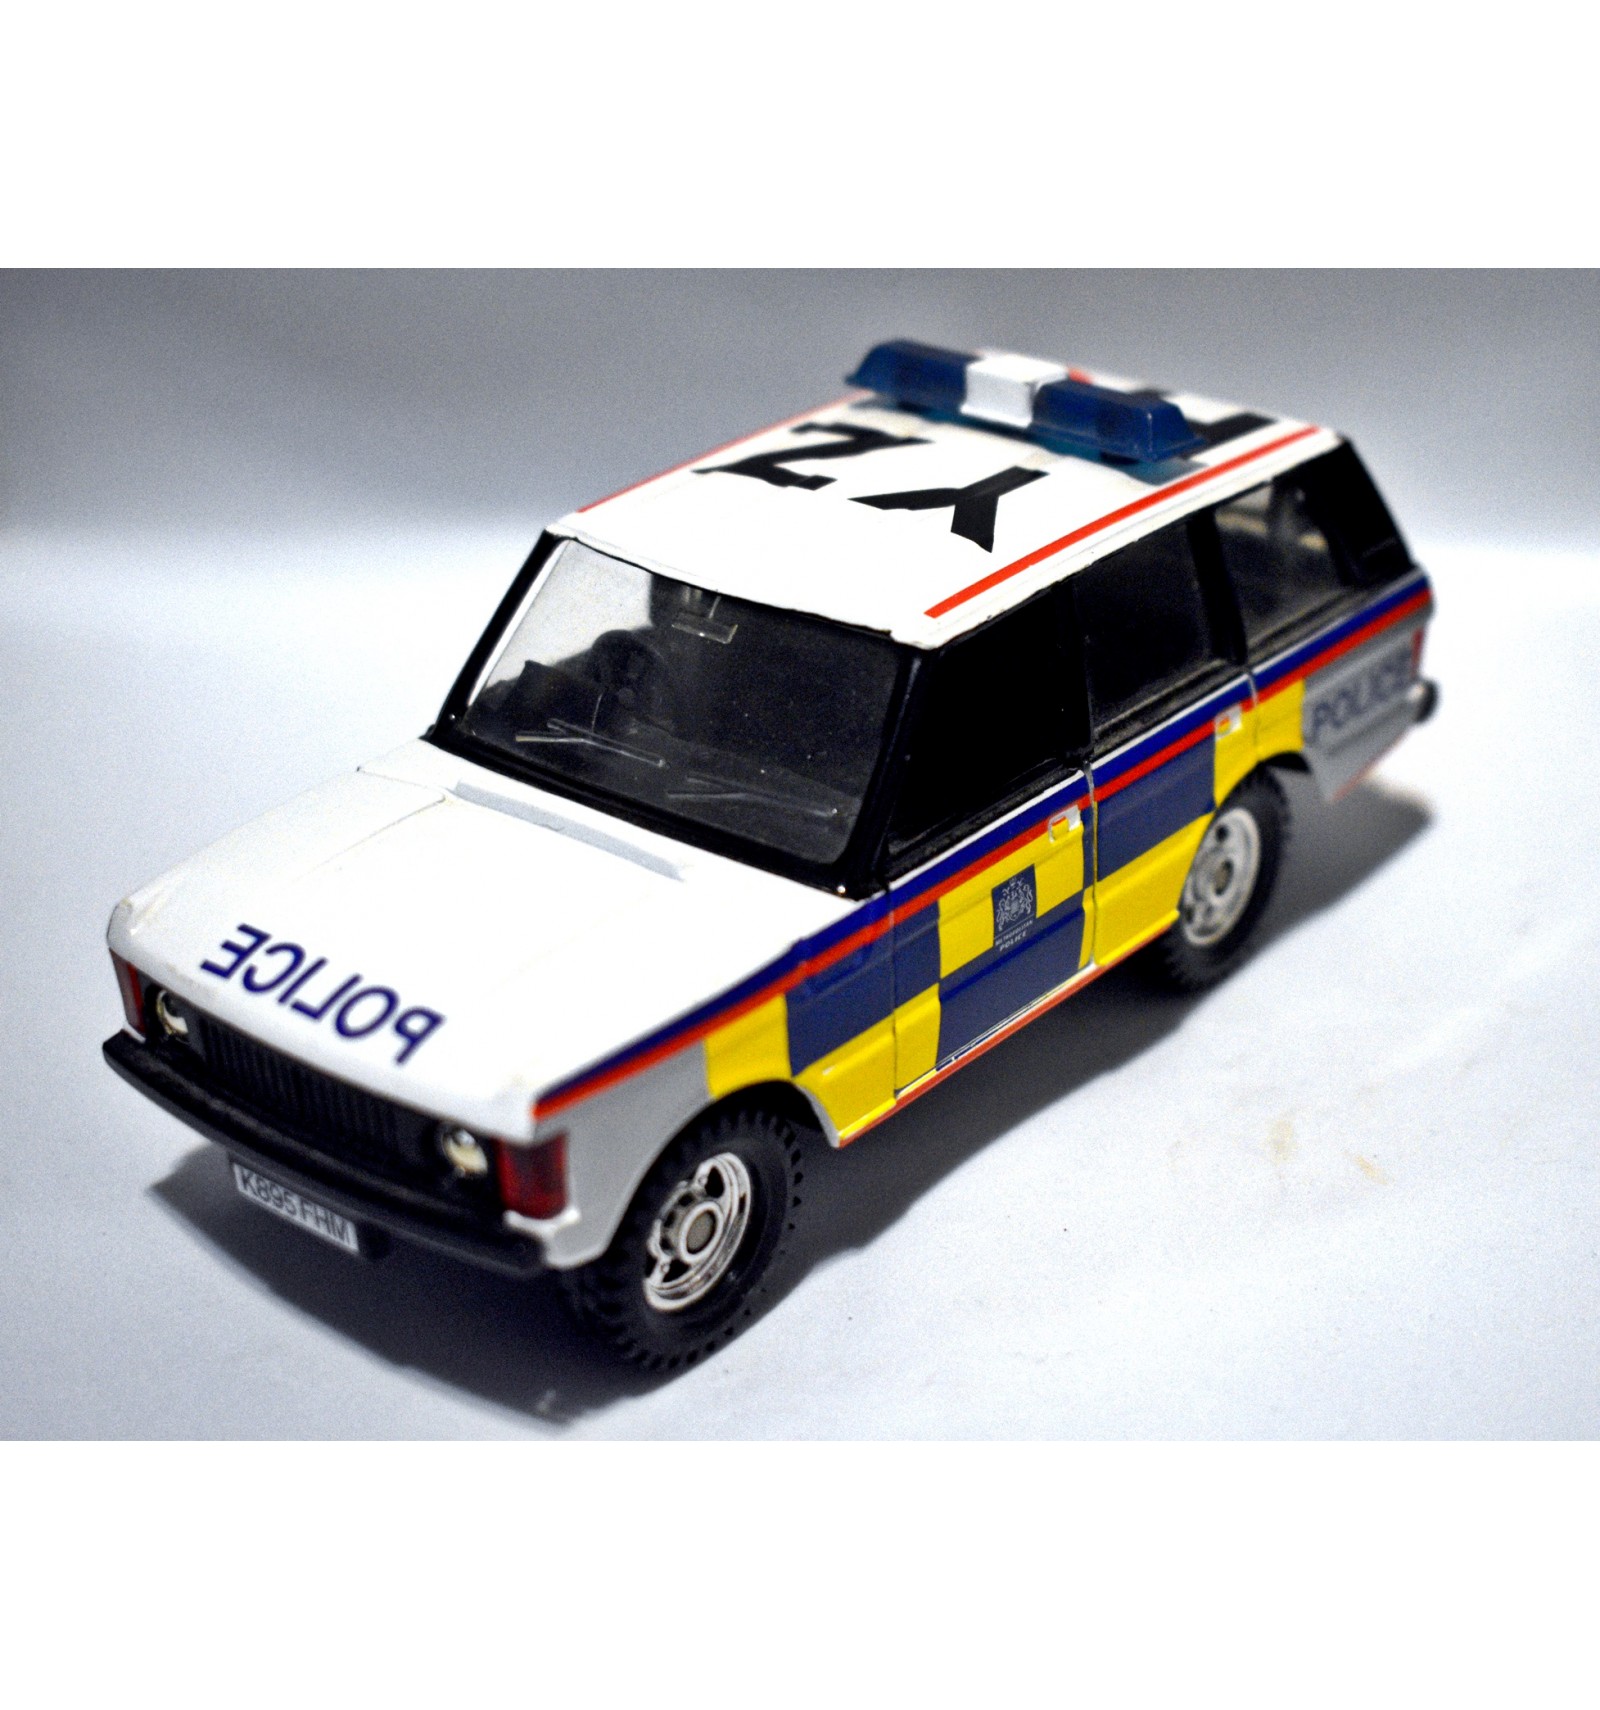 Corgi 57601 diecast Range Rover Metropolitan Police Car With Working Features 